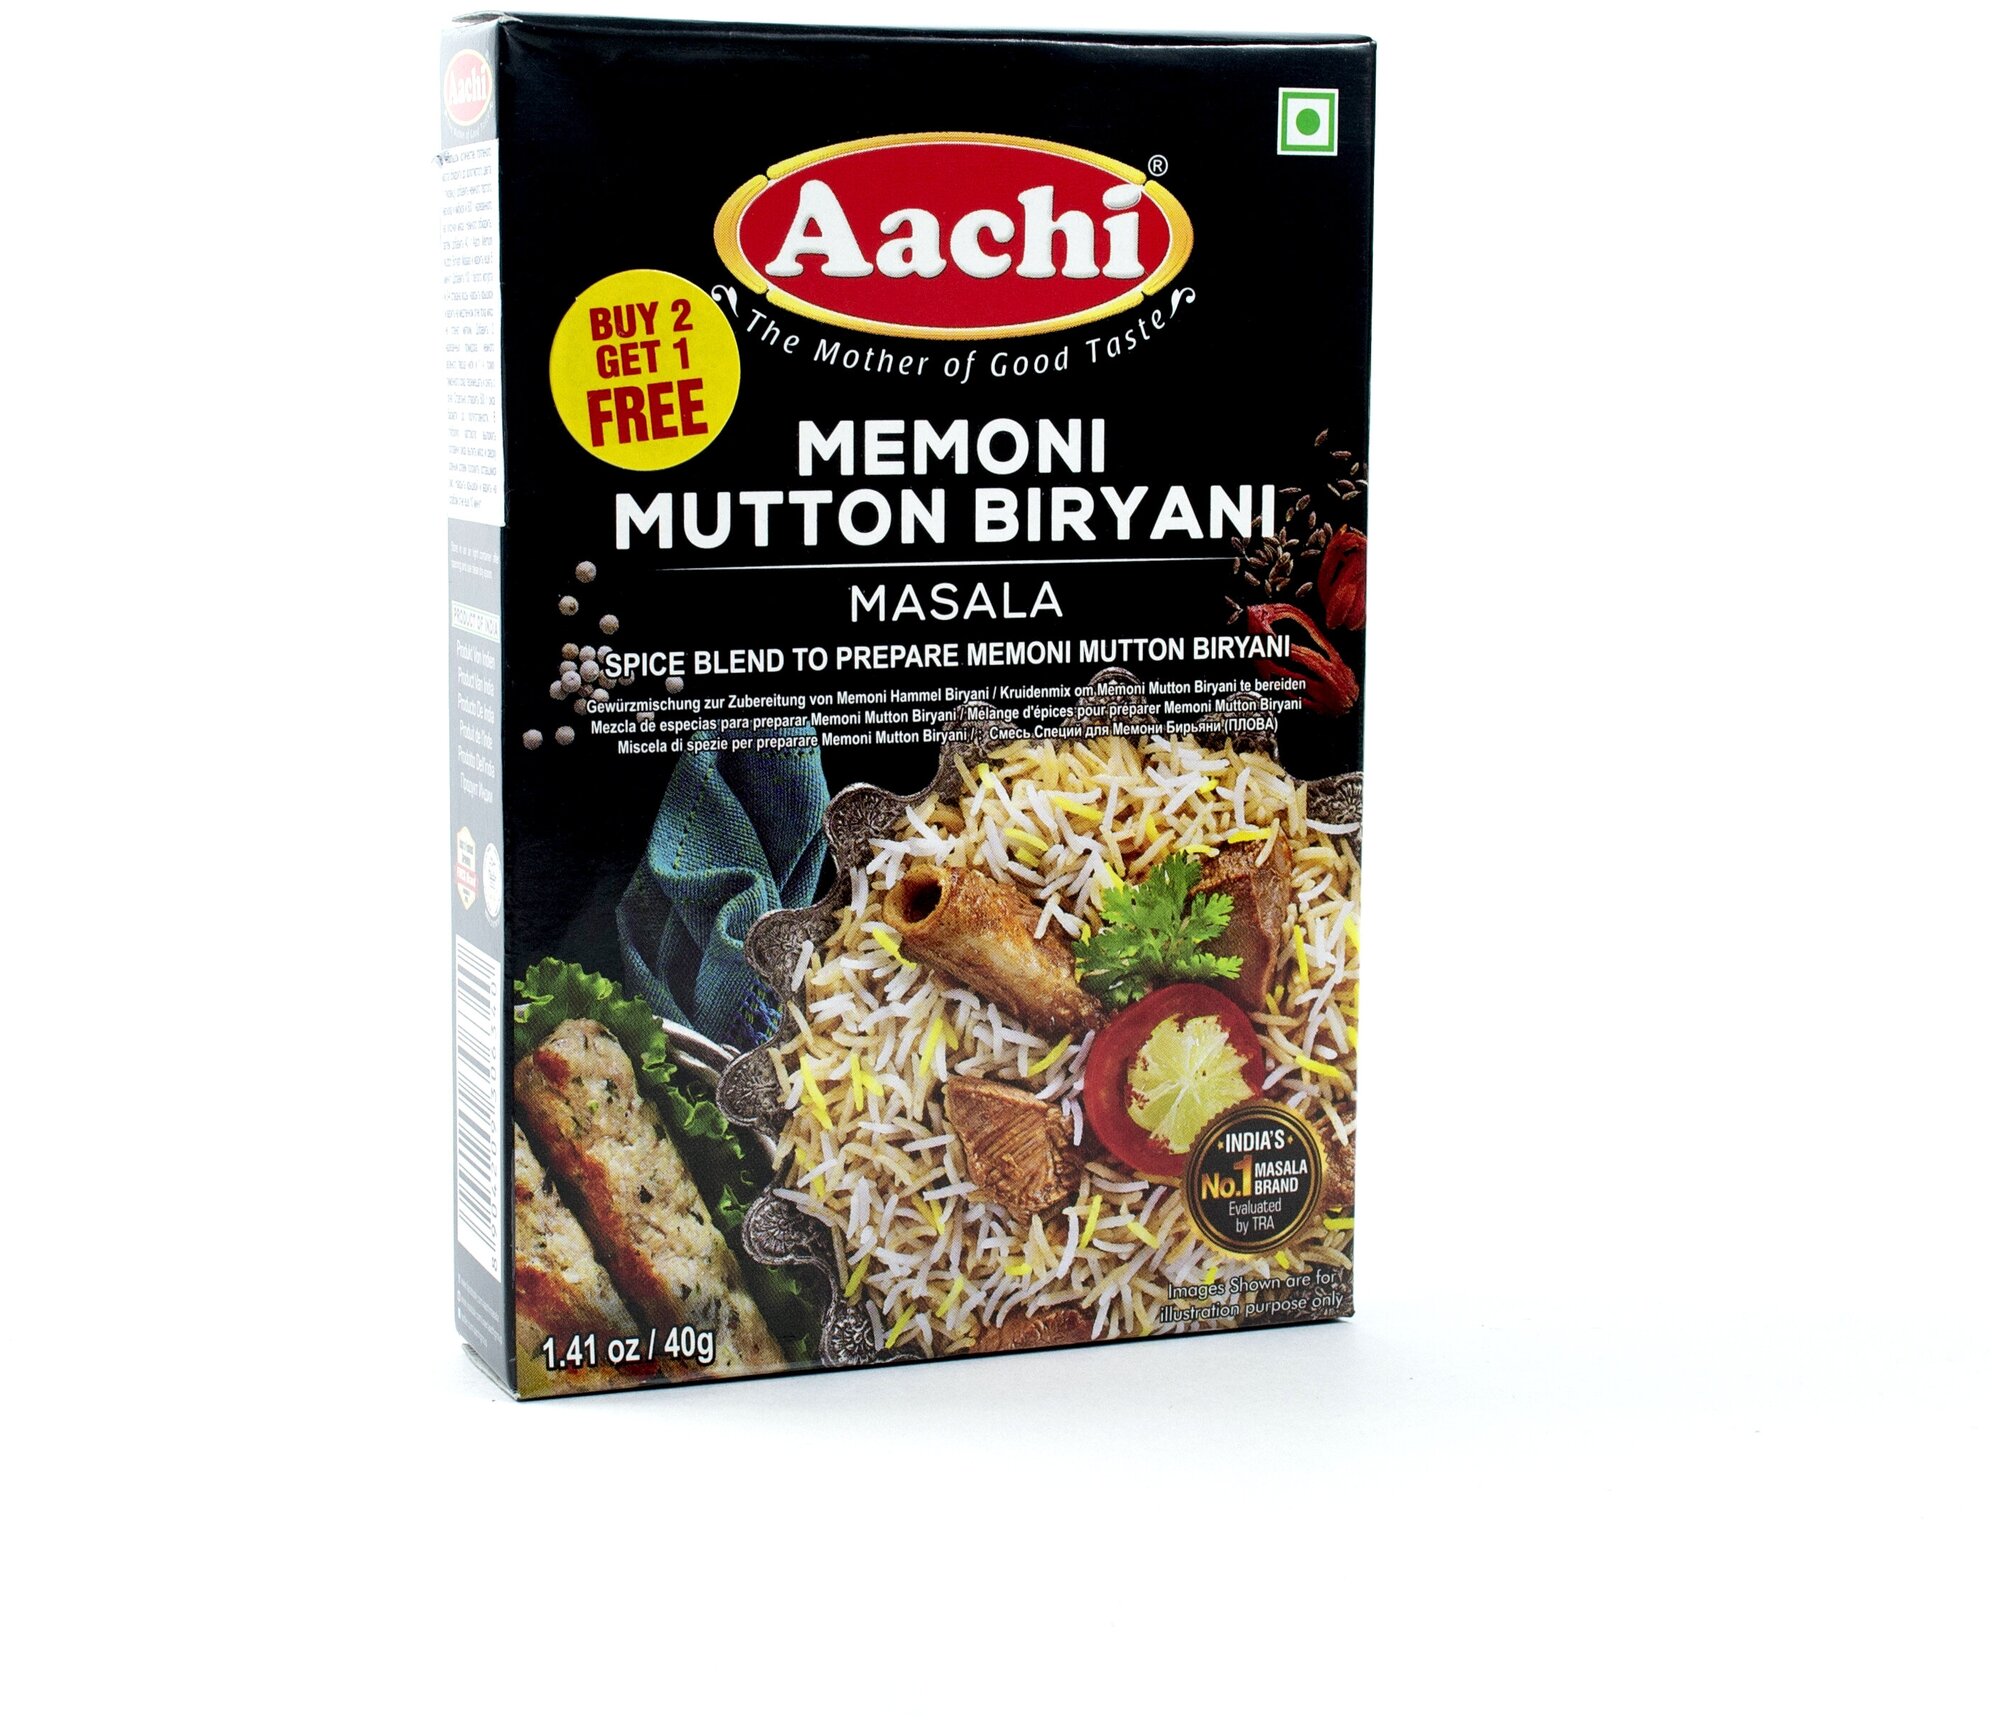 Aachi Смесь Специй для плова Мемони Бирьяни (Memoni Mutton Biriyani Masala) 40 г